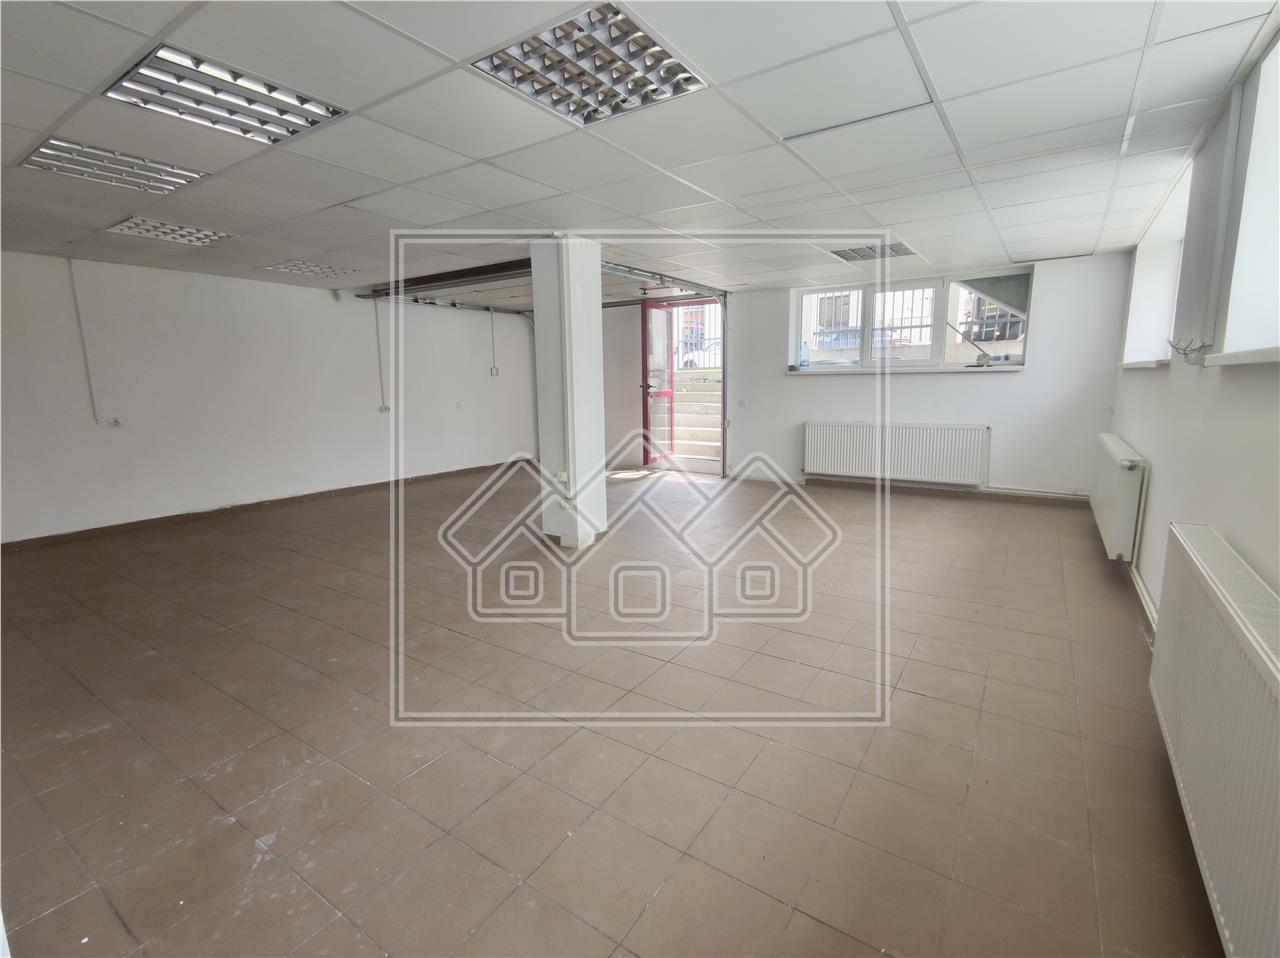 Commercial / office space for rent in Sibiu - Calea Turnisorului